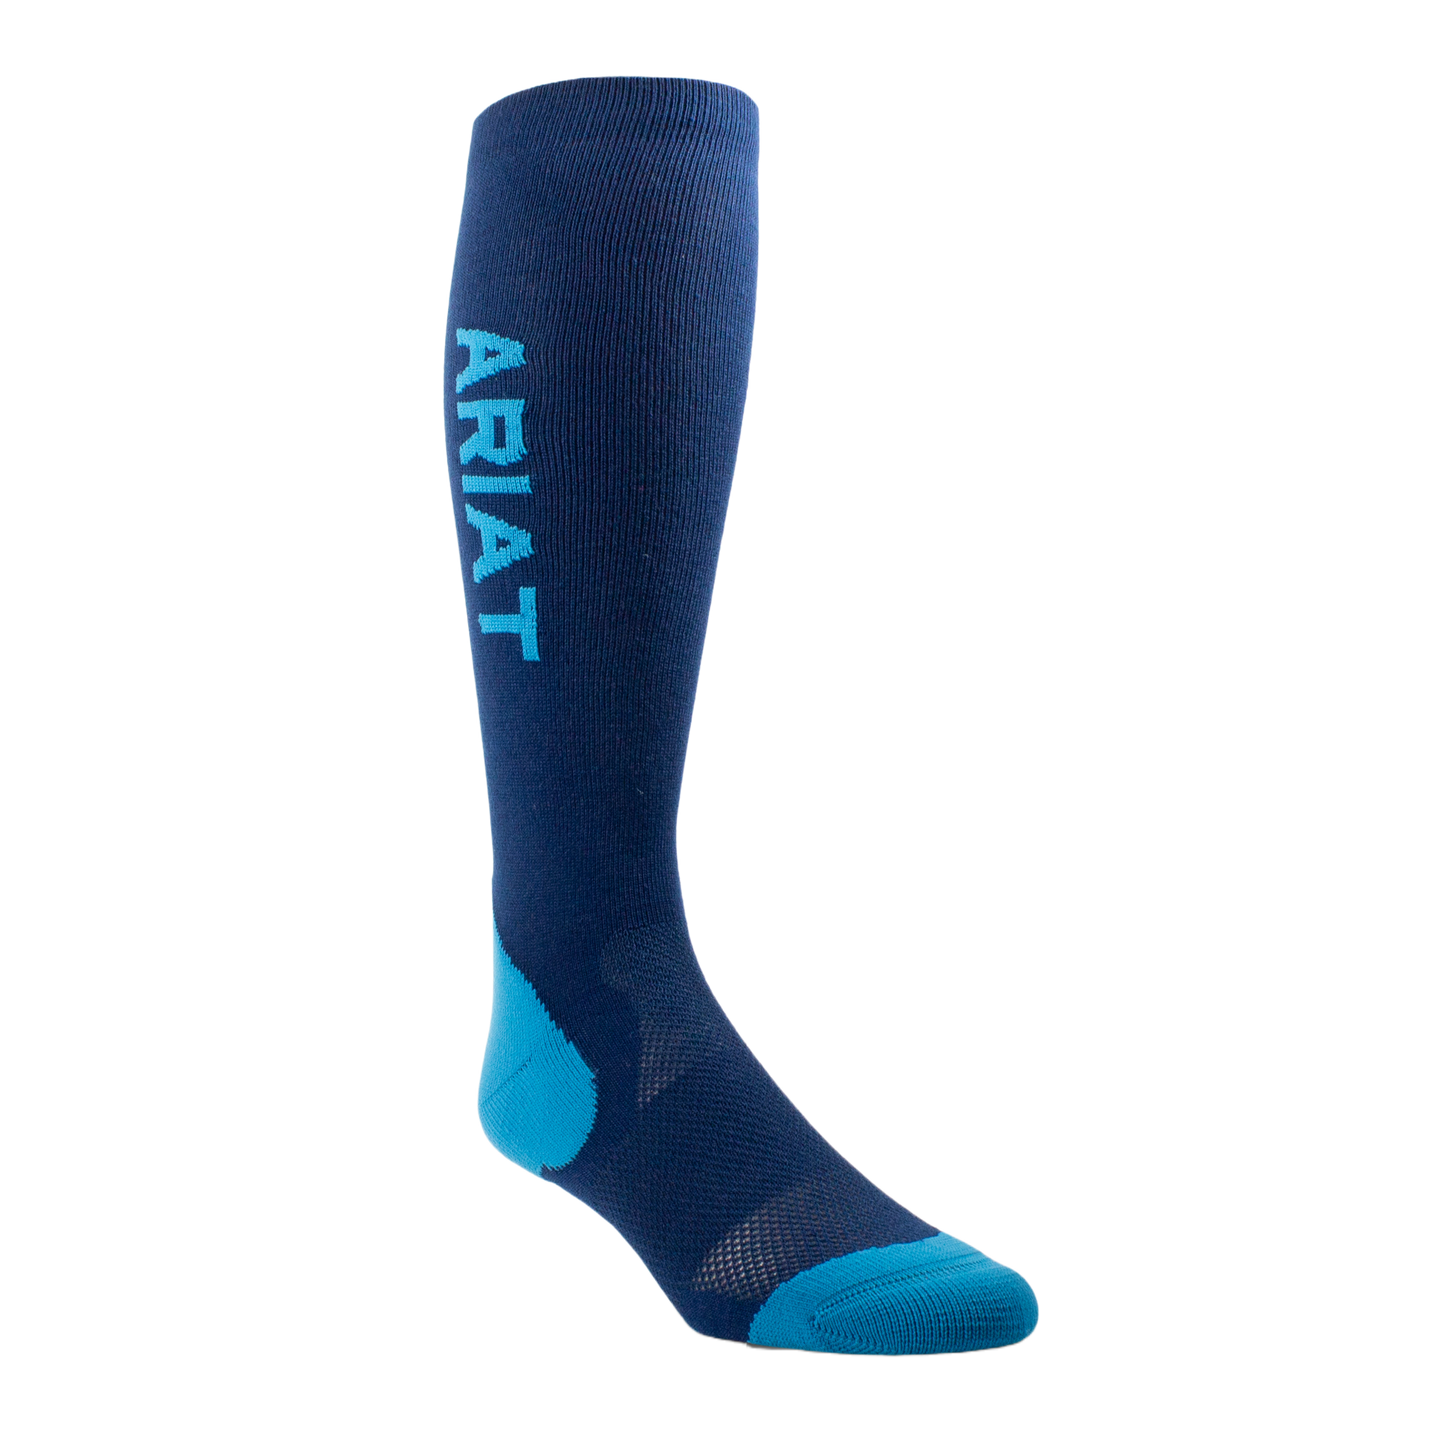 Ariat® AriatTEK Navy & Mosiac Blue Performance Socks 10043930